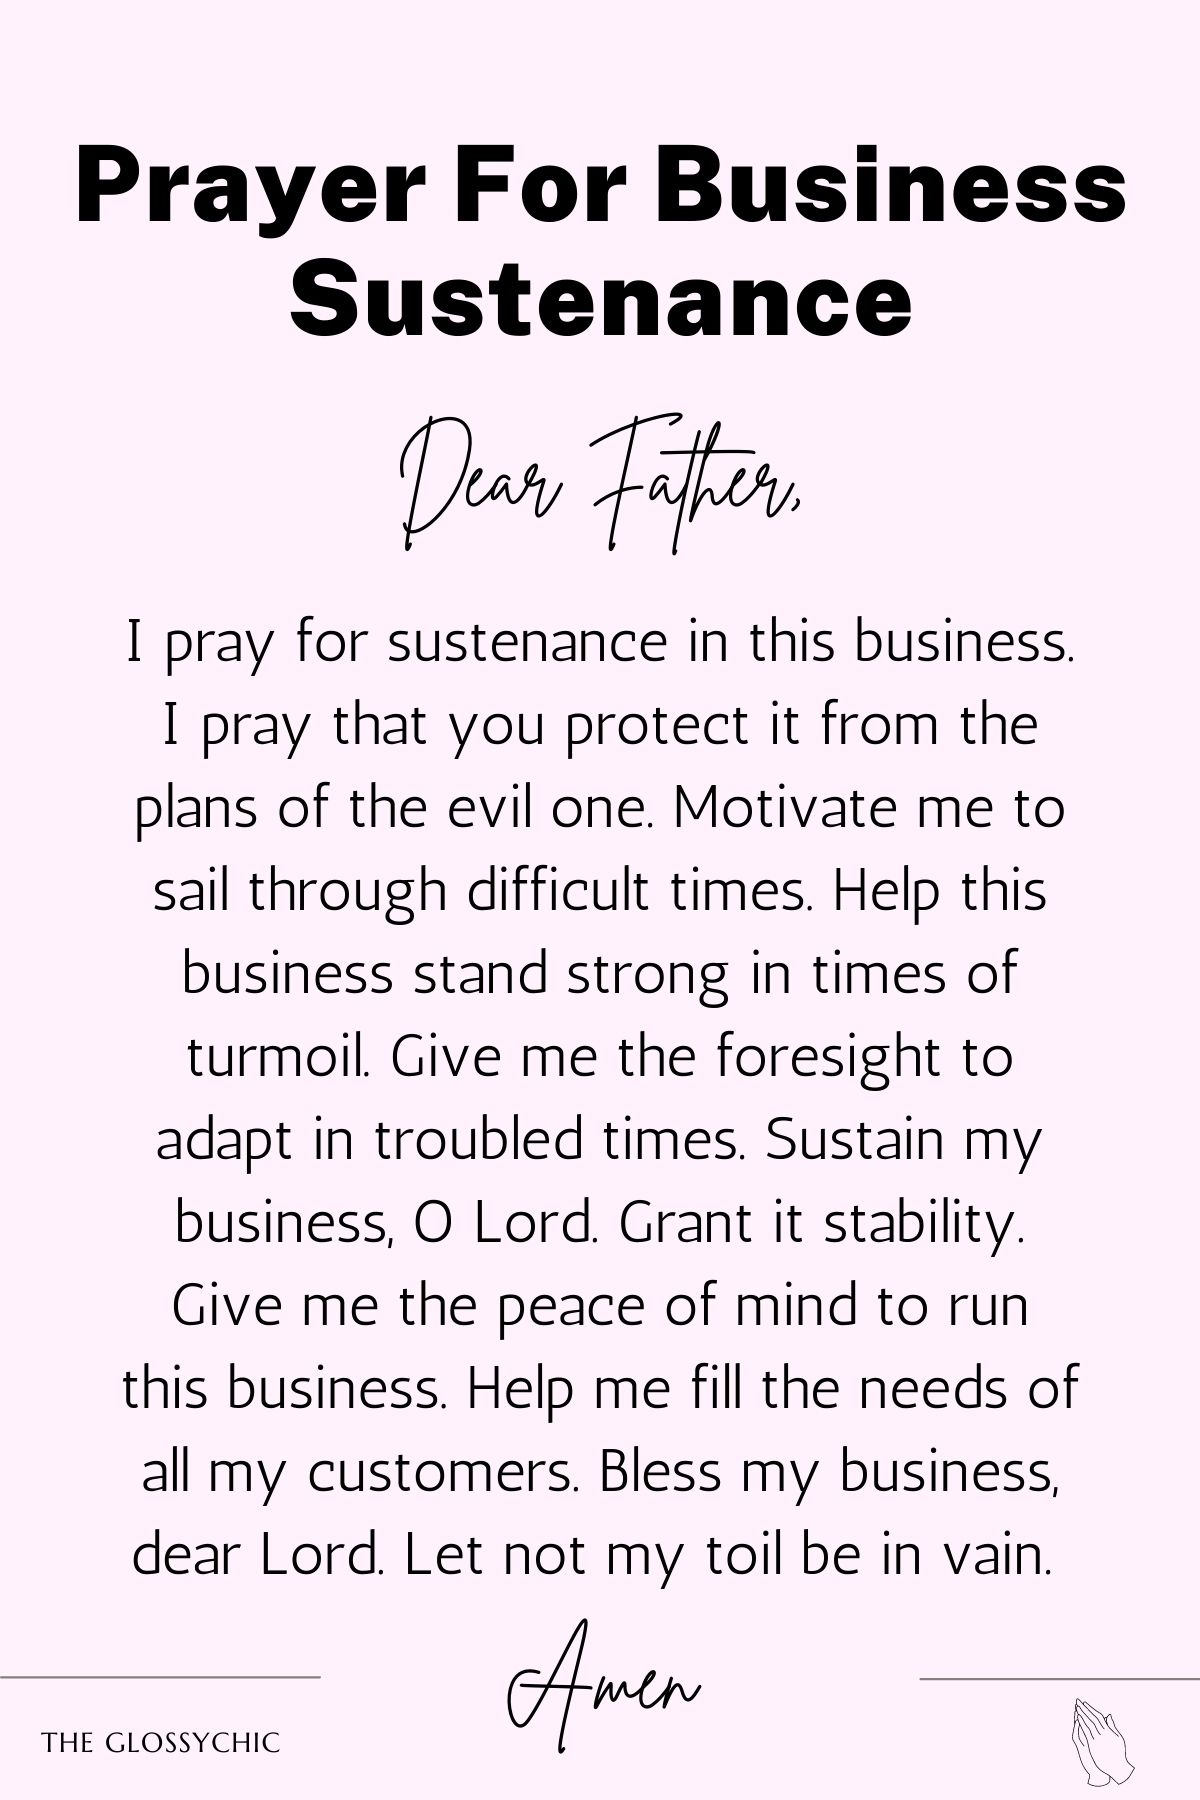 Prayer for business sustenance - business prayer points